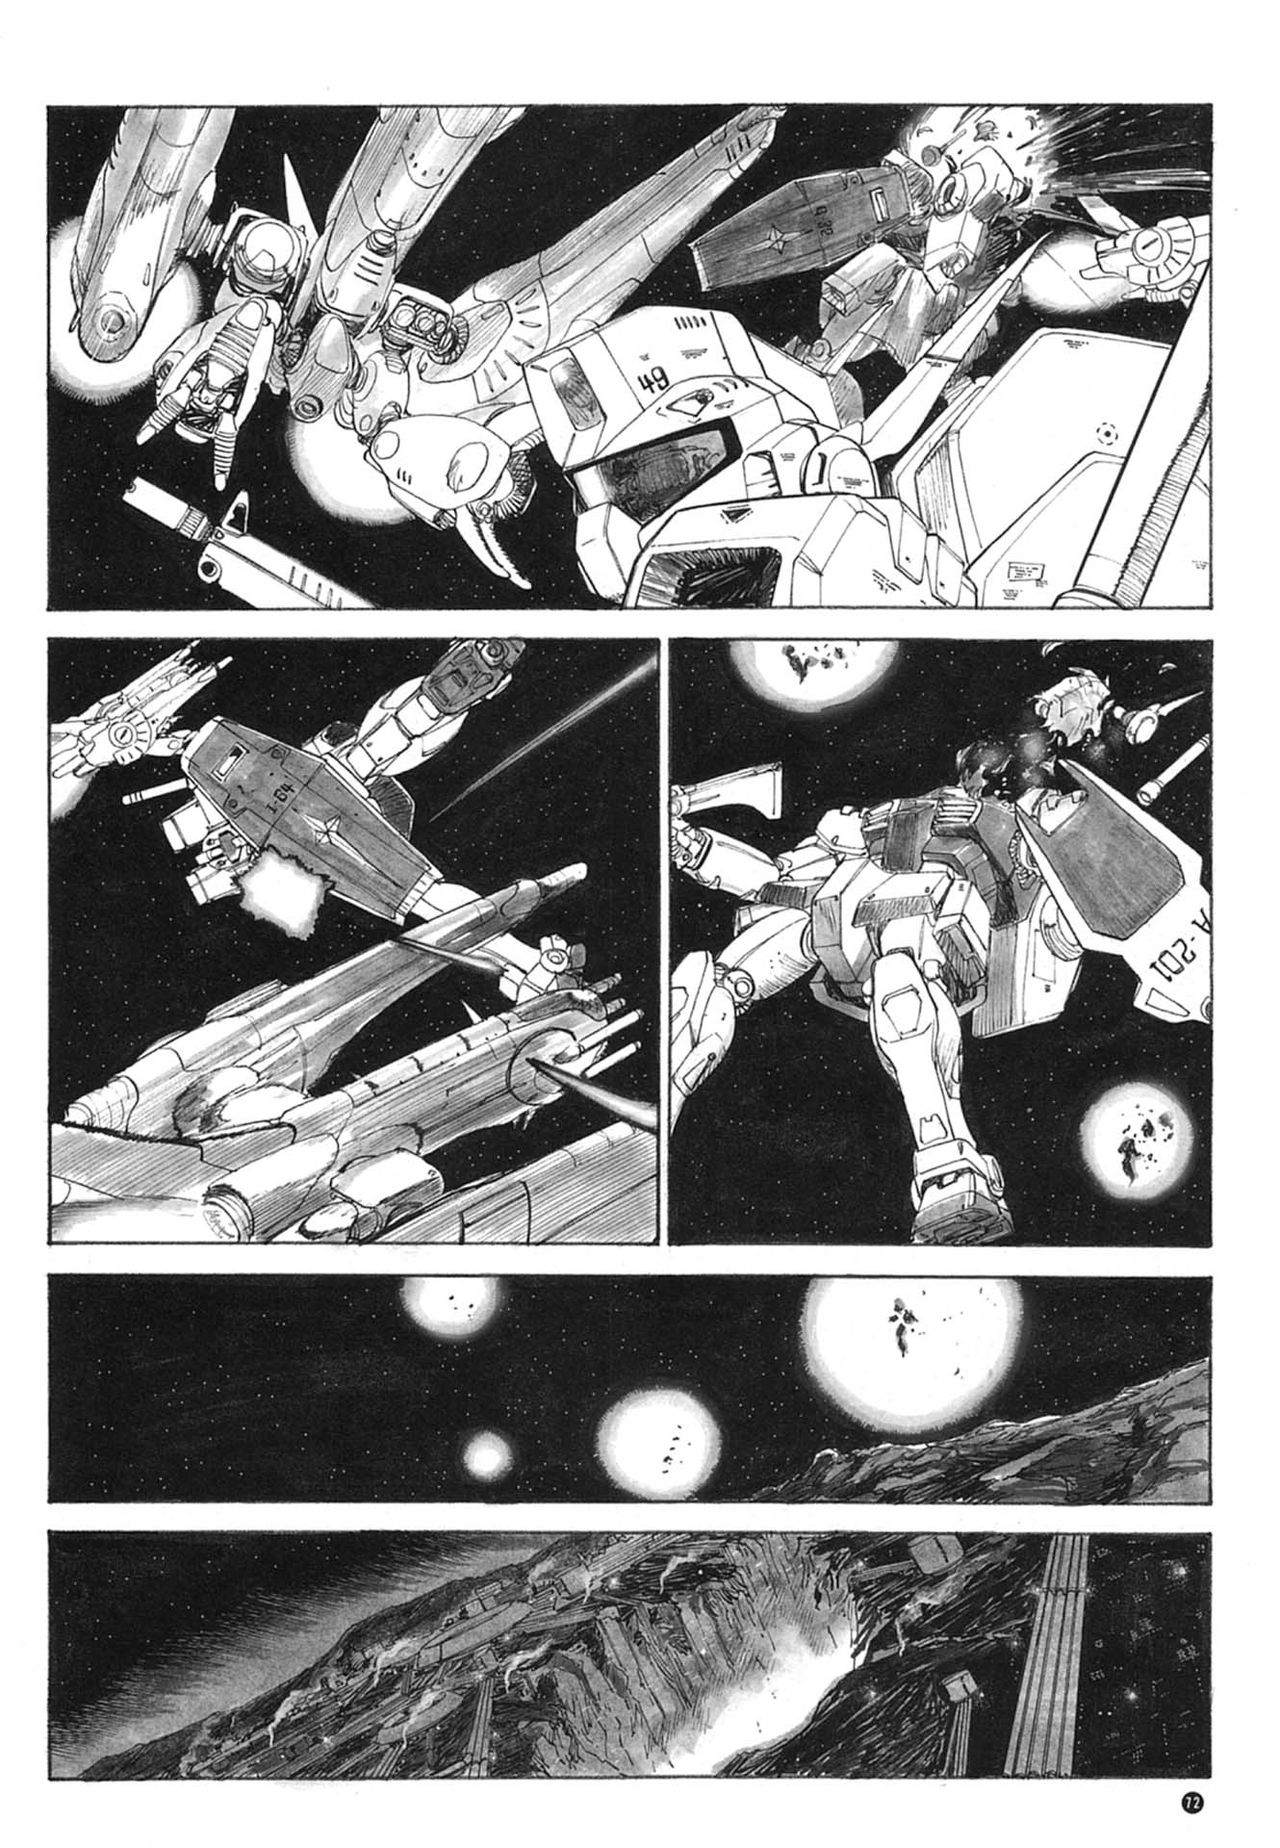 [Kazuhisa Kondo] Kazuhisa Kondo 2D & 3D Works - Go Ahead - From Mobile Suit Gundam to Original Mechanism 71